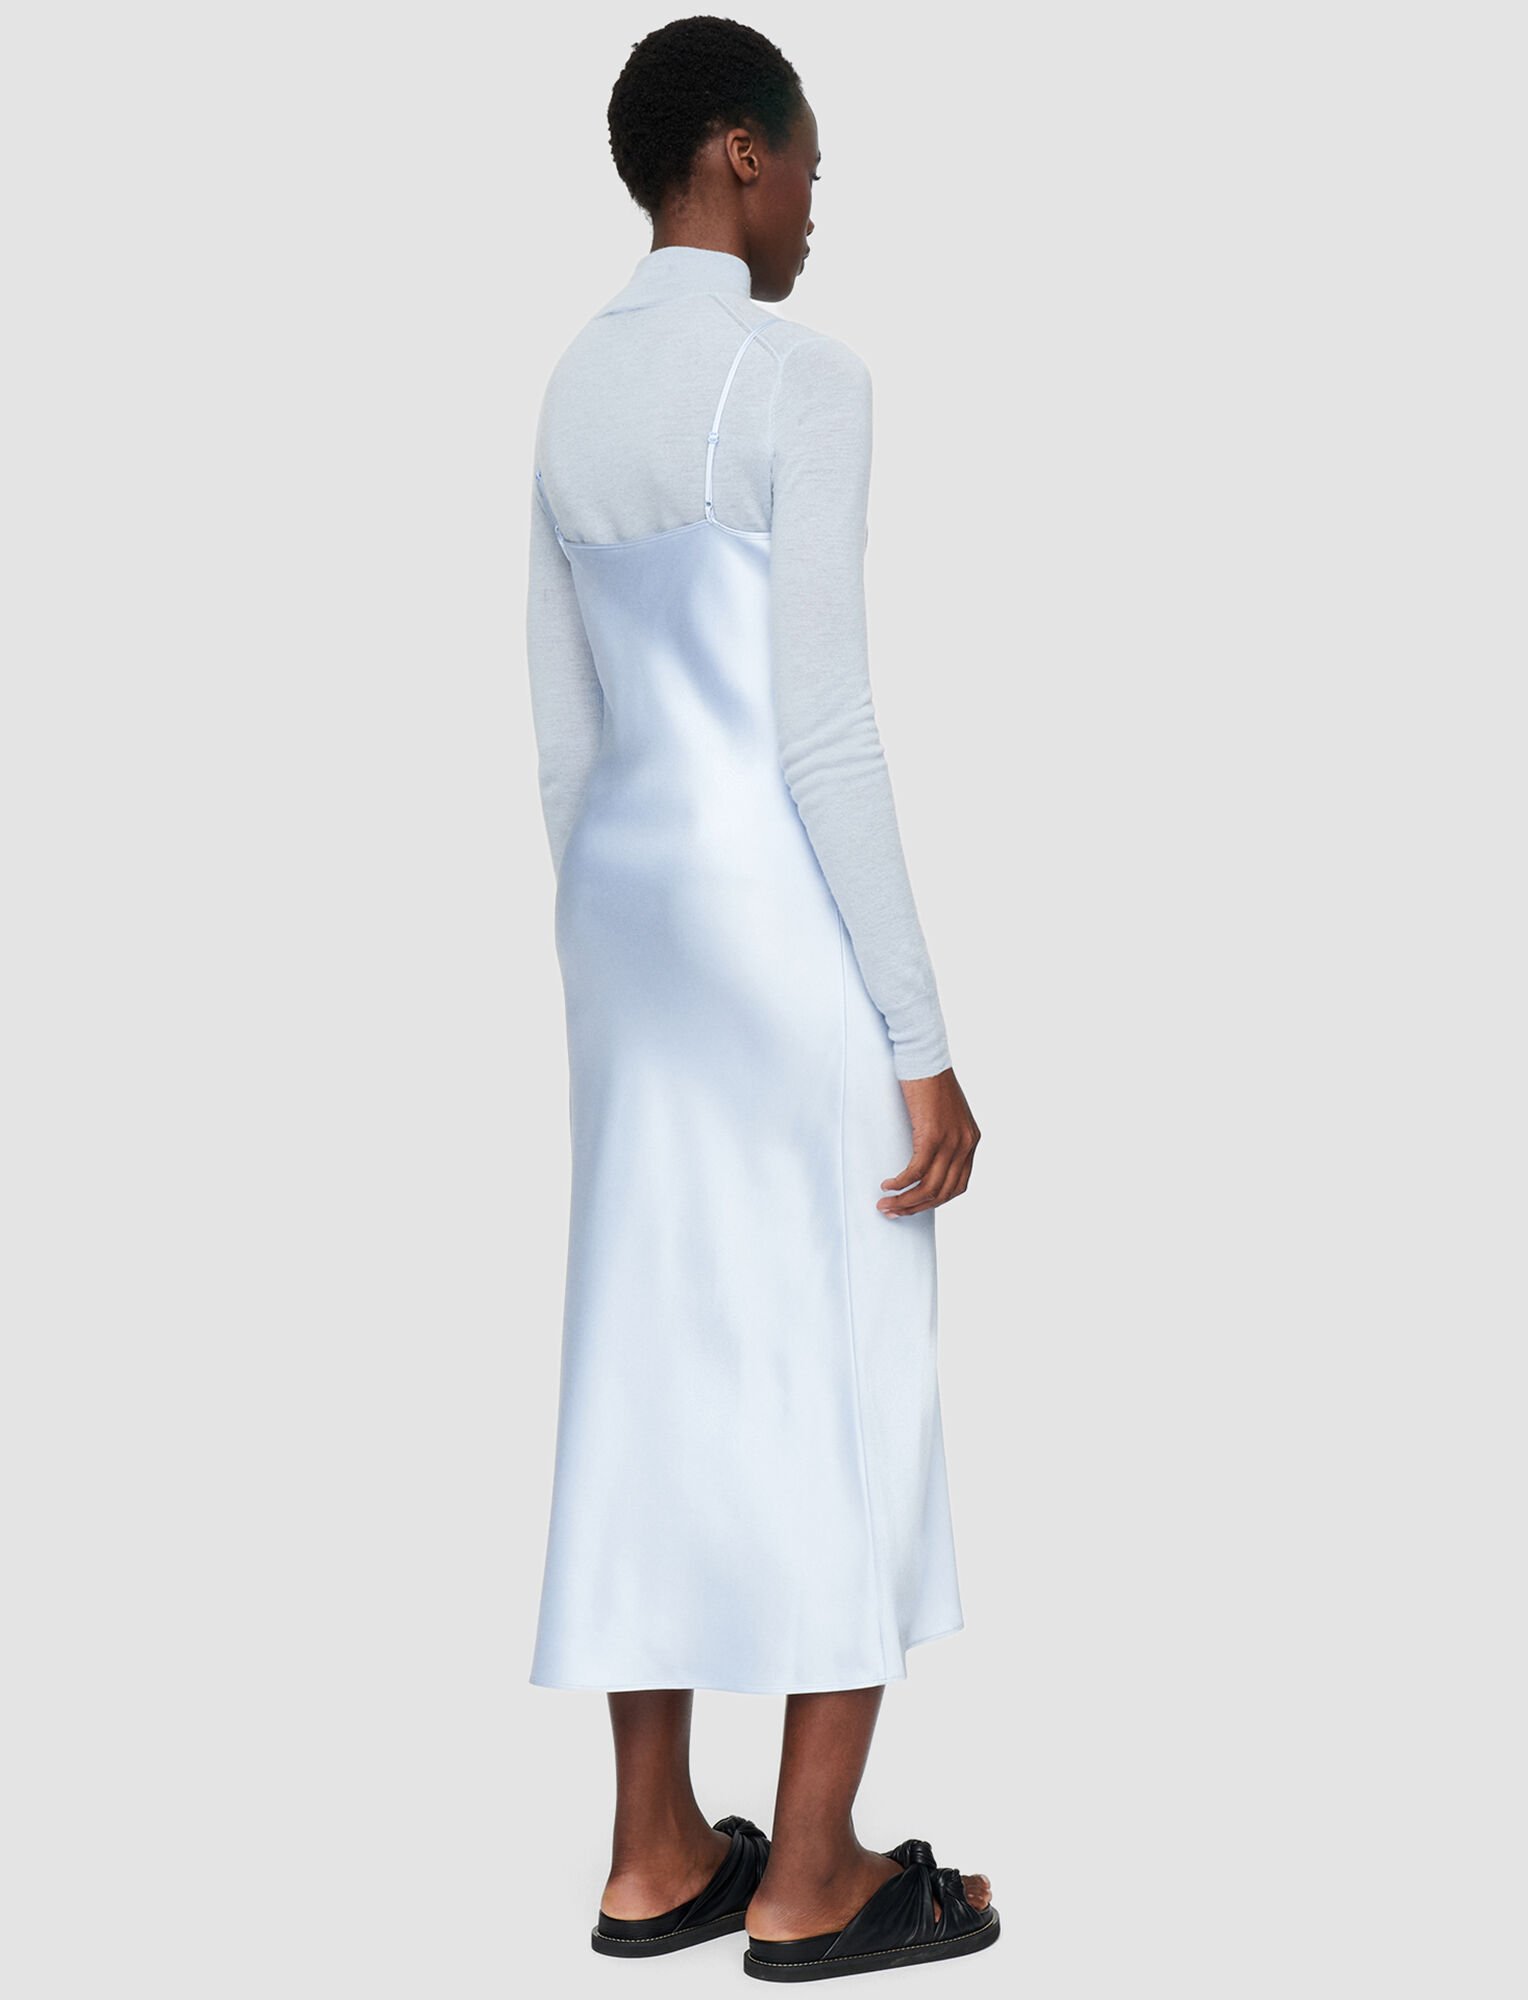 Joseph, Silk Satin Clea Dress, in Horizon